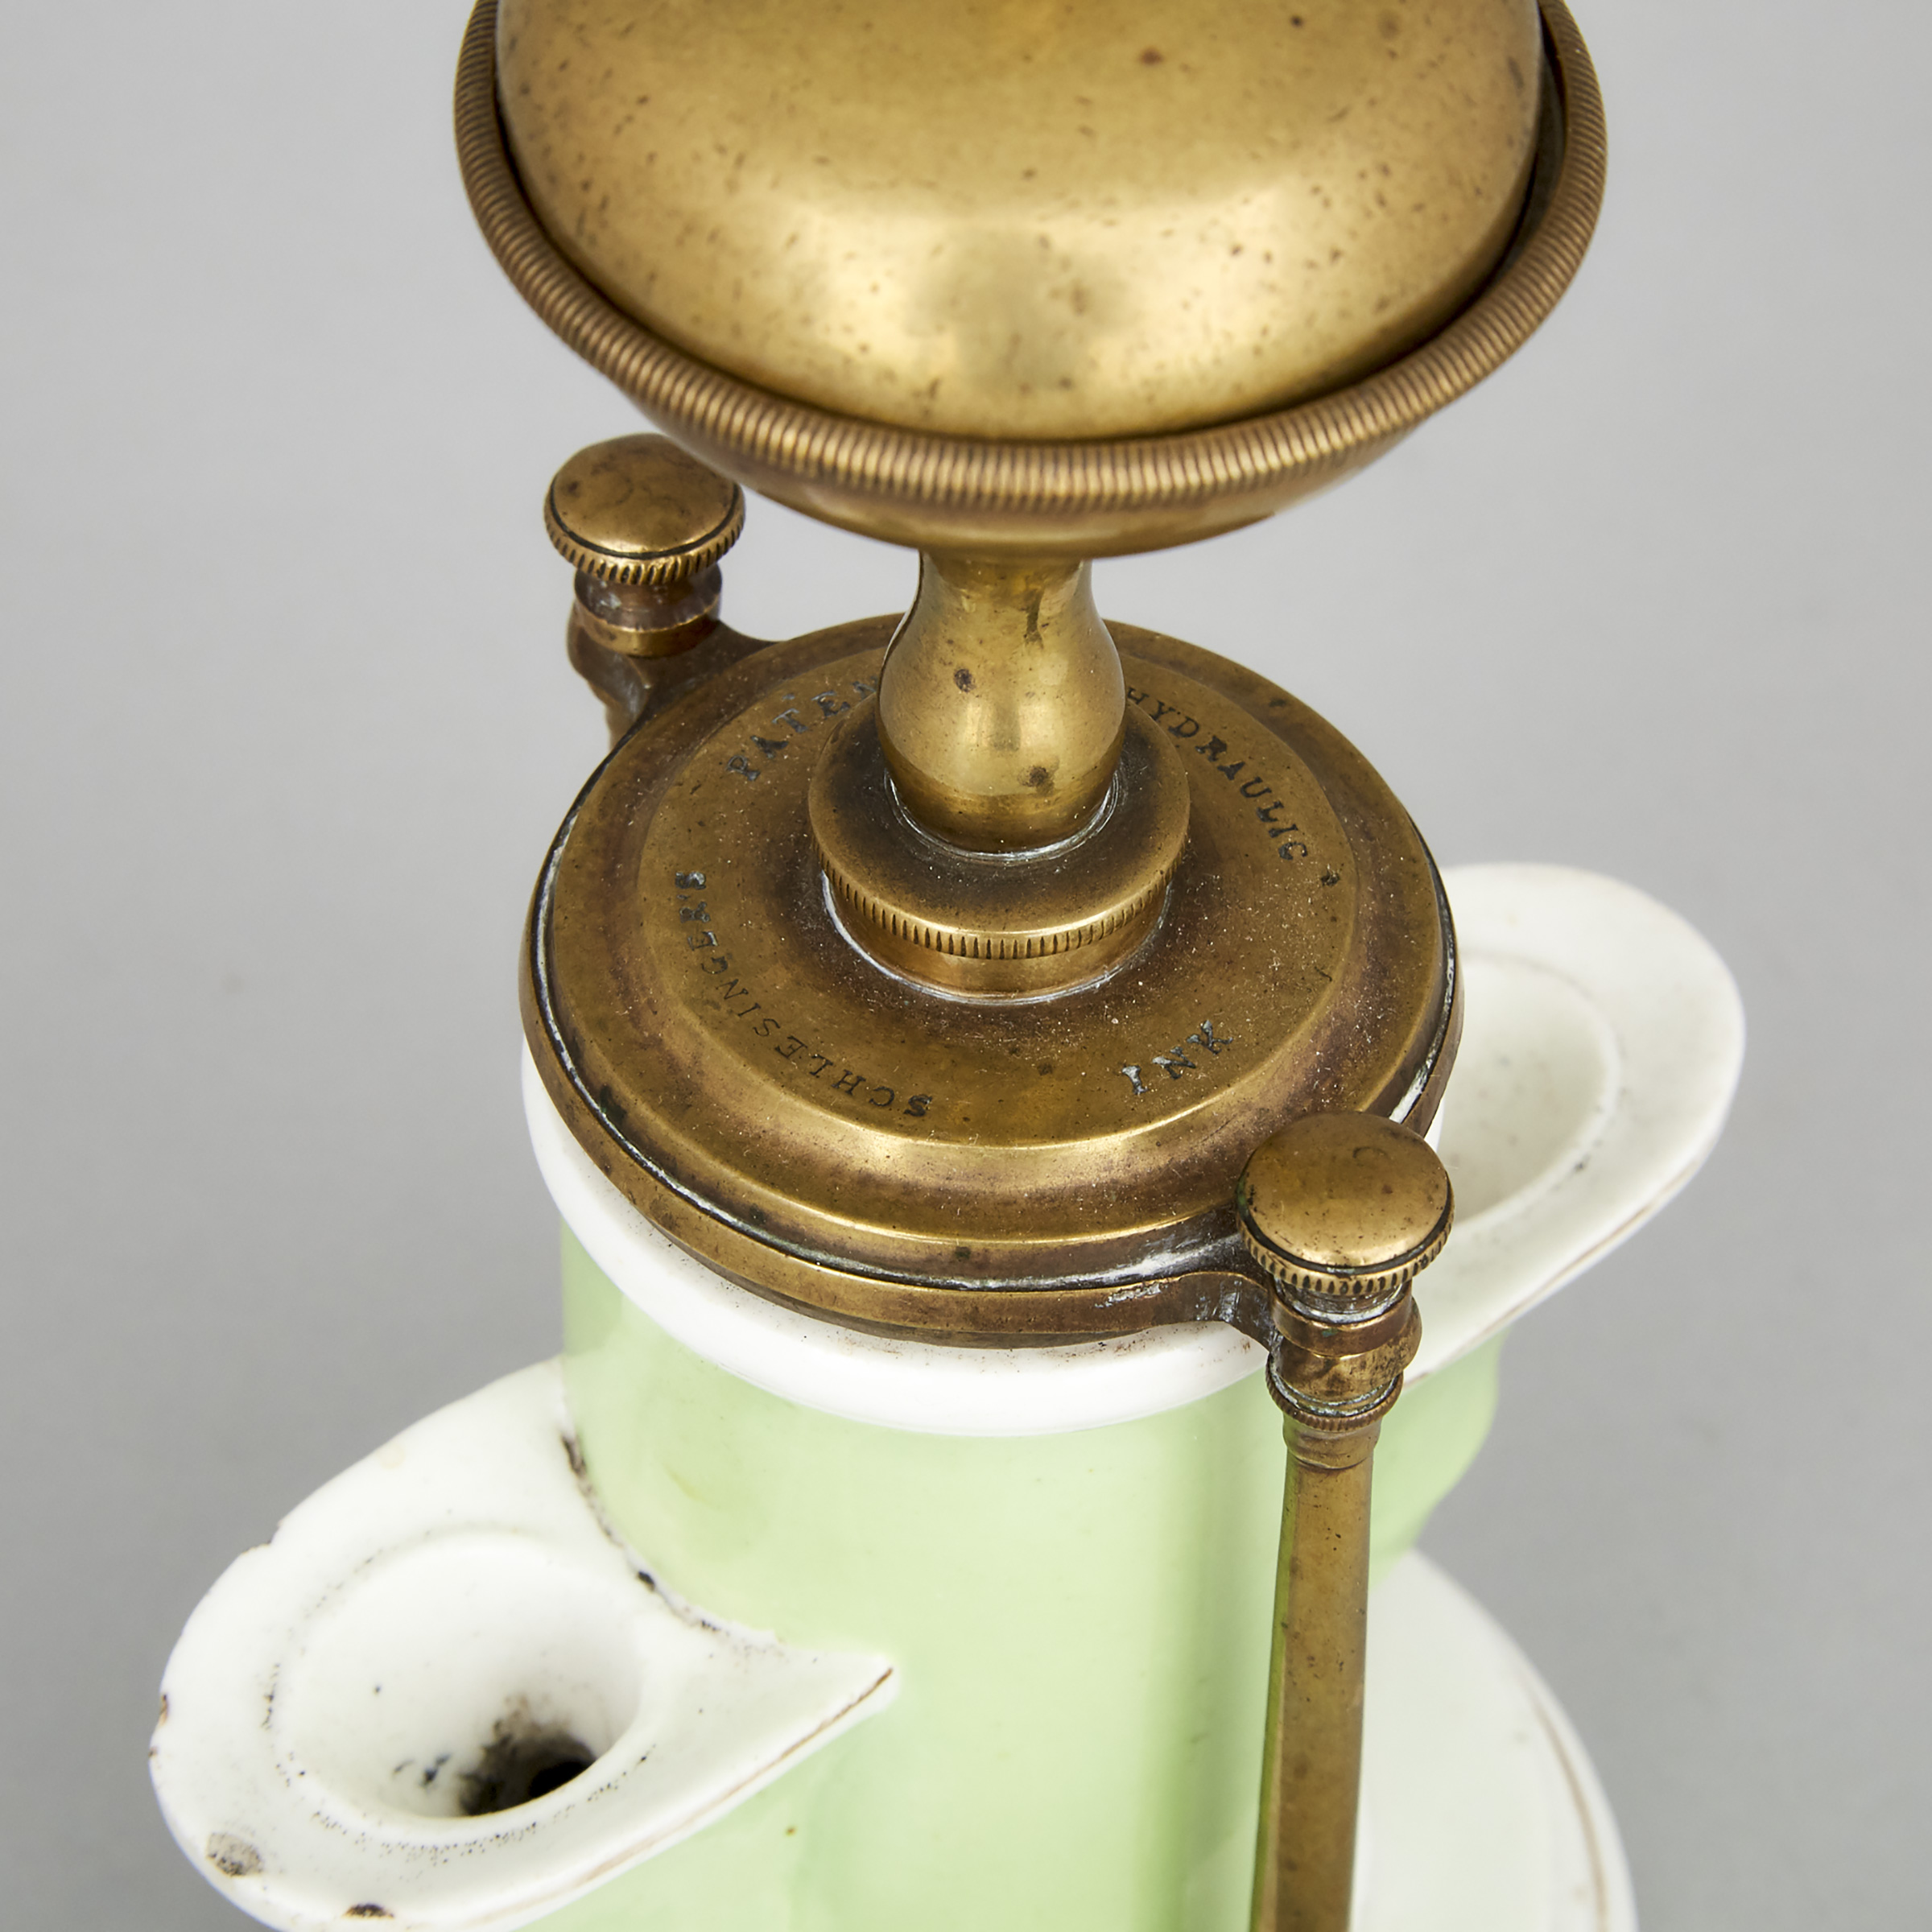 Joseph Schlesinger's Patent Hydraulic Ink Pot, mid 19th century